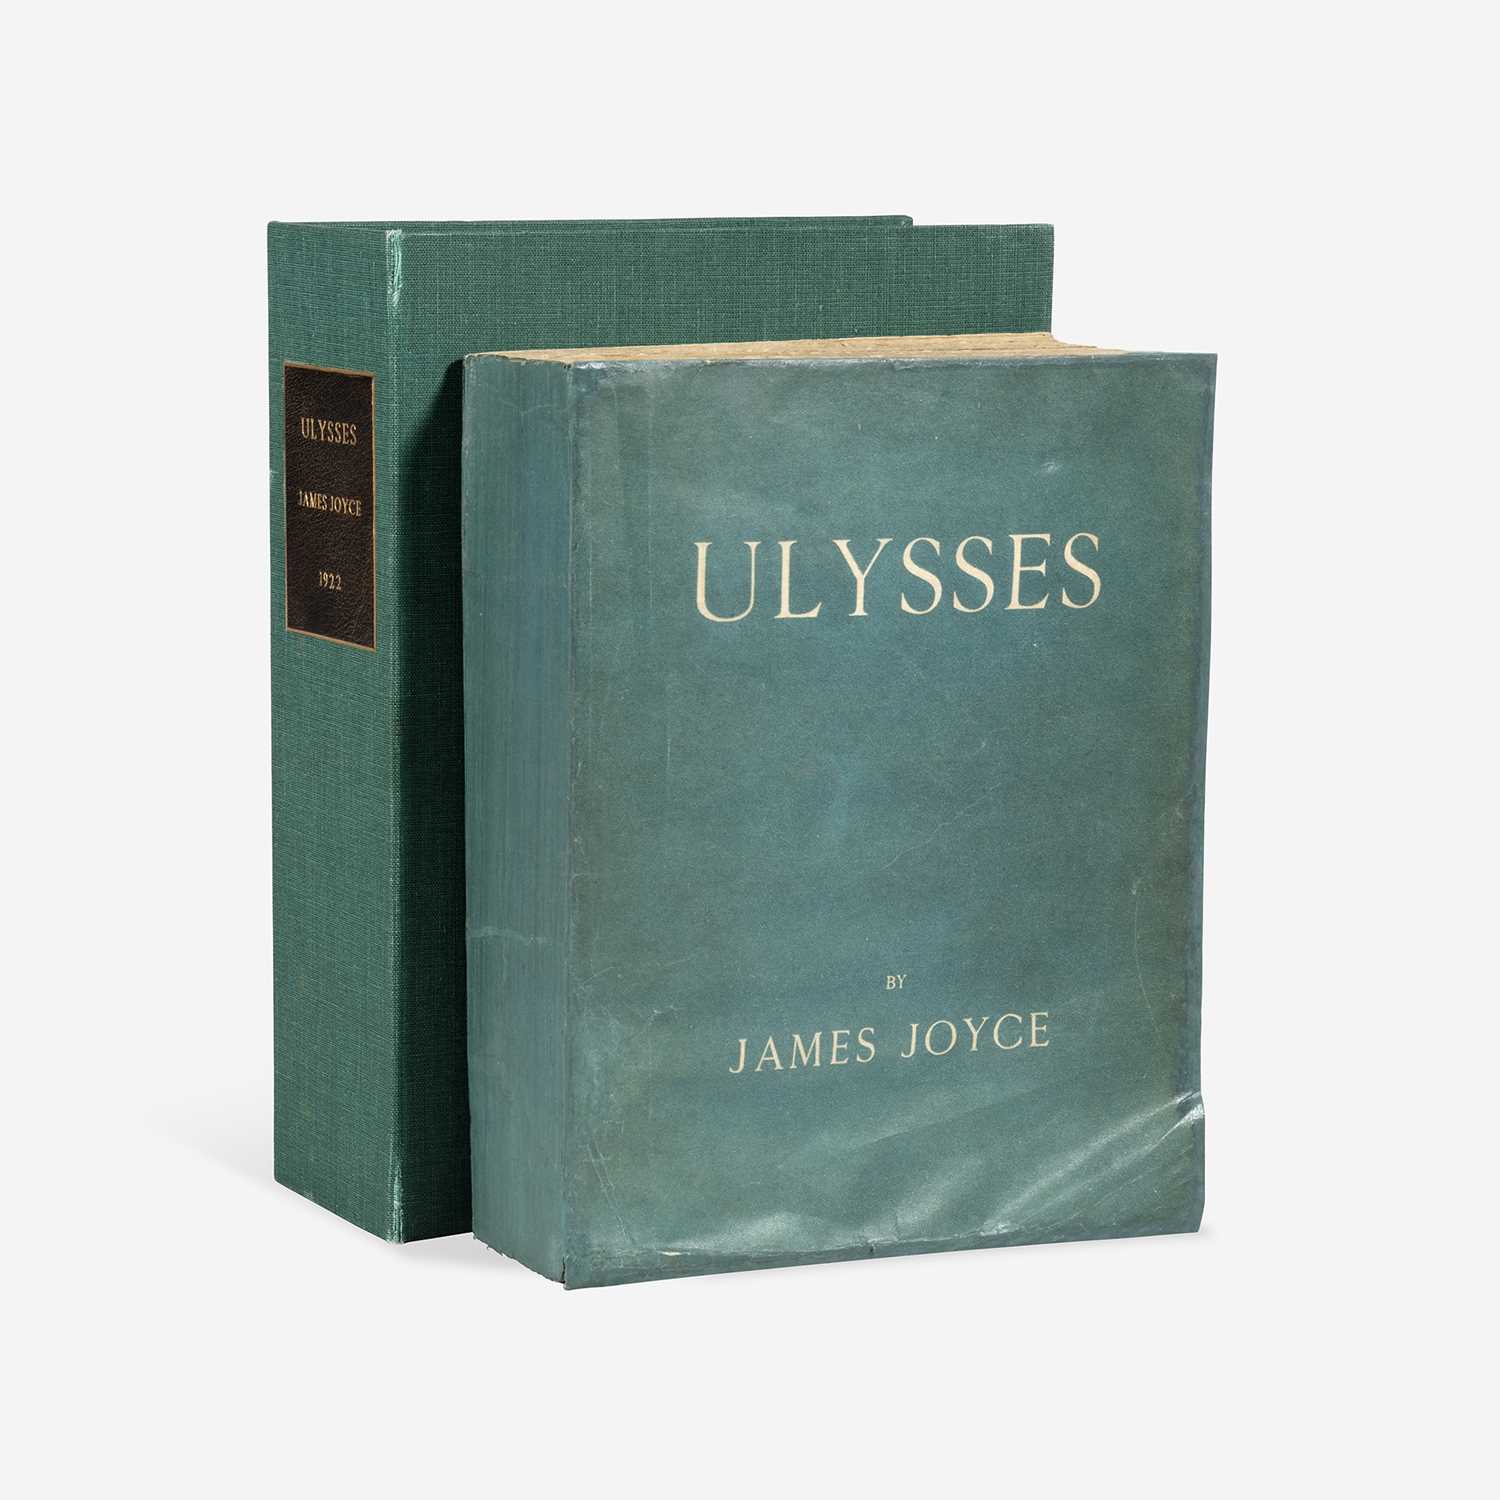 Lot 71 - [Literature] Joyce, James